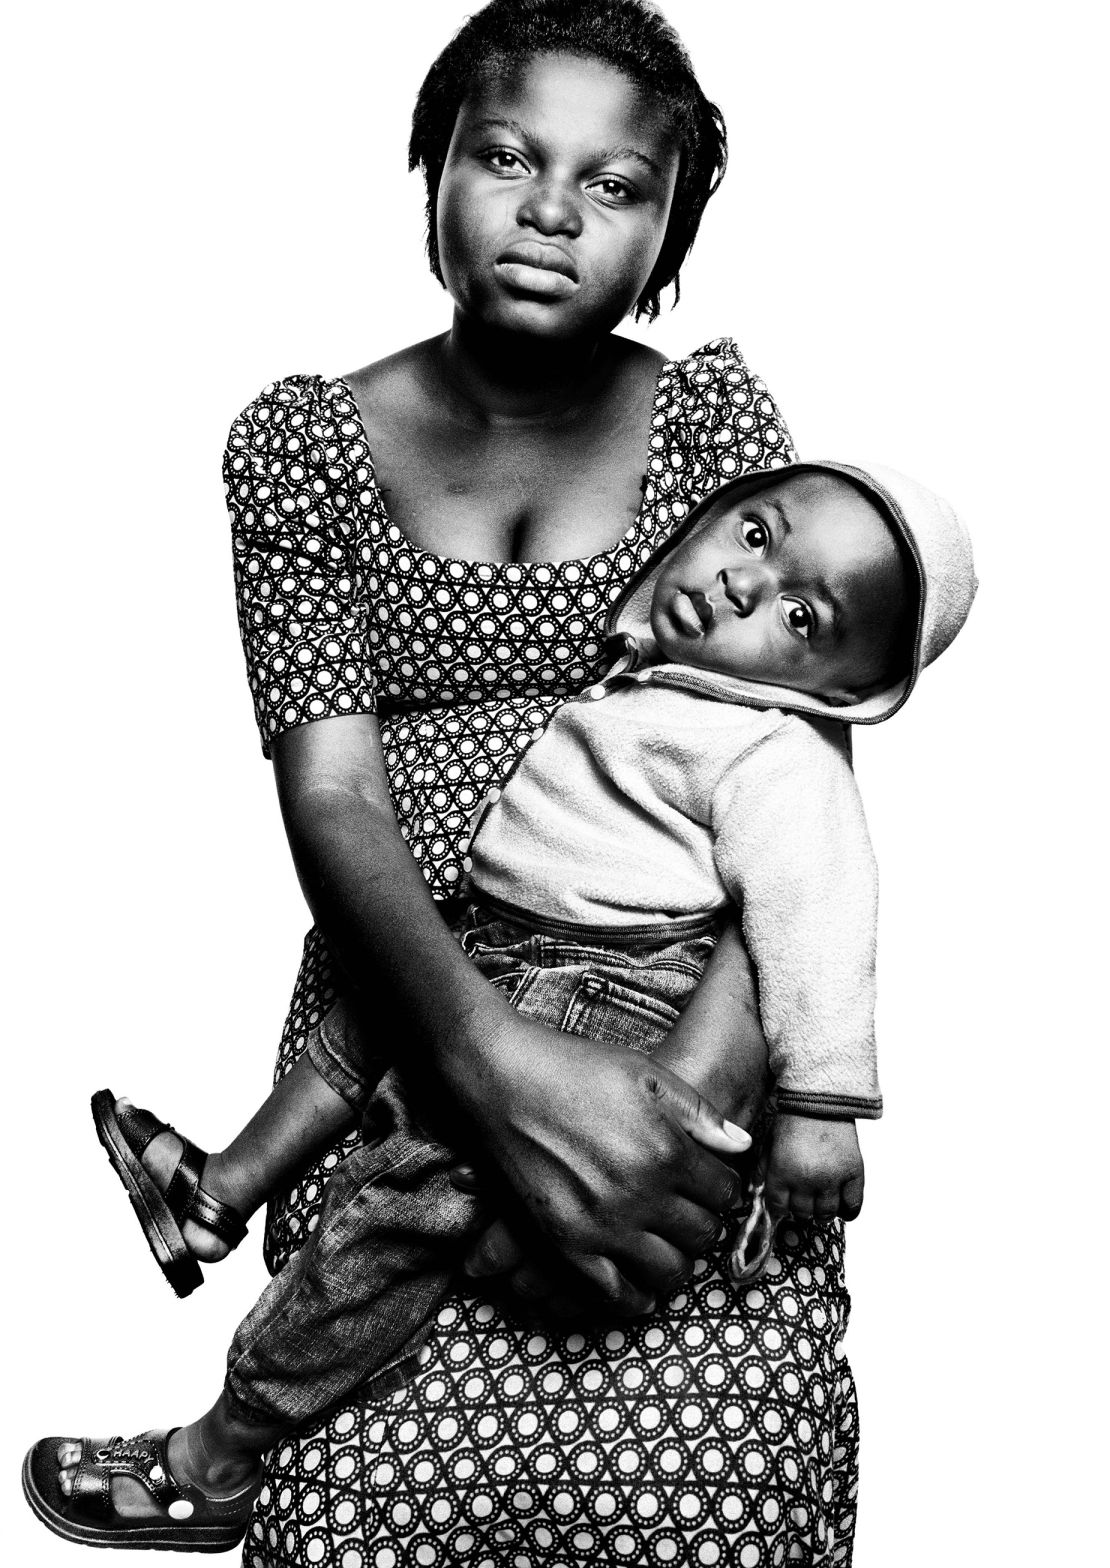 Platon photographed Esther Faraja and her son Josue at Dr. Mukwege's Panzi Hospital in Congo.